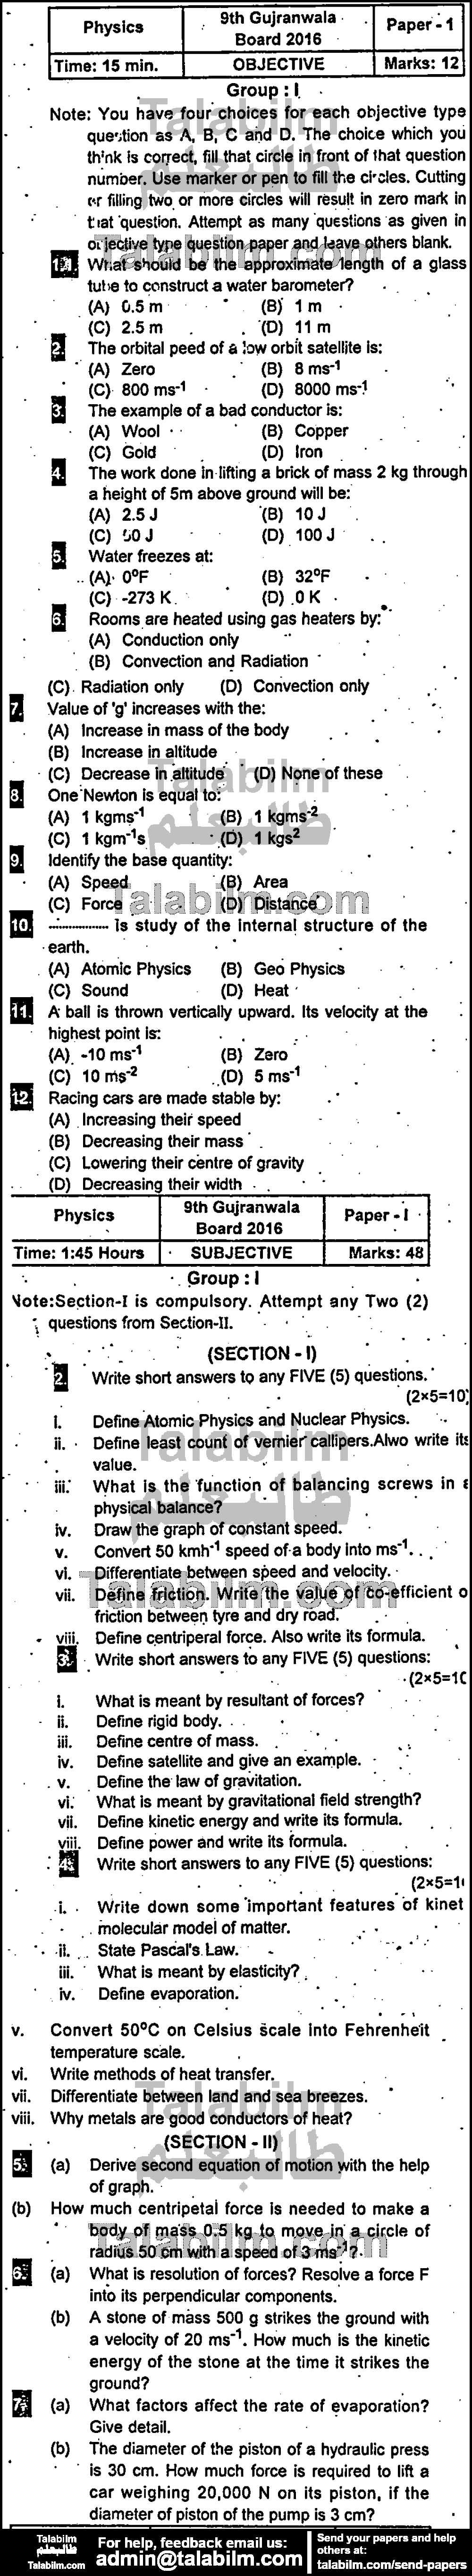 Physics 0 past paper for English Medium 2016 Group-I